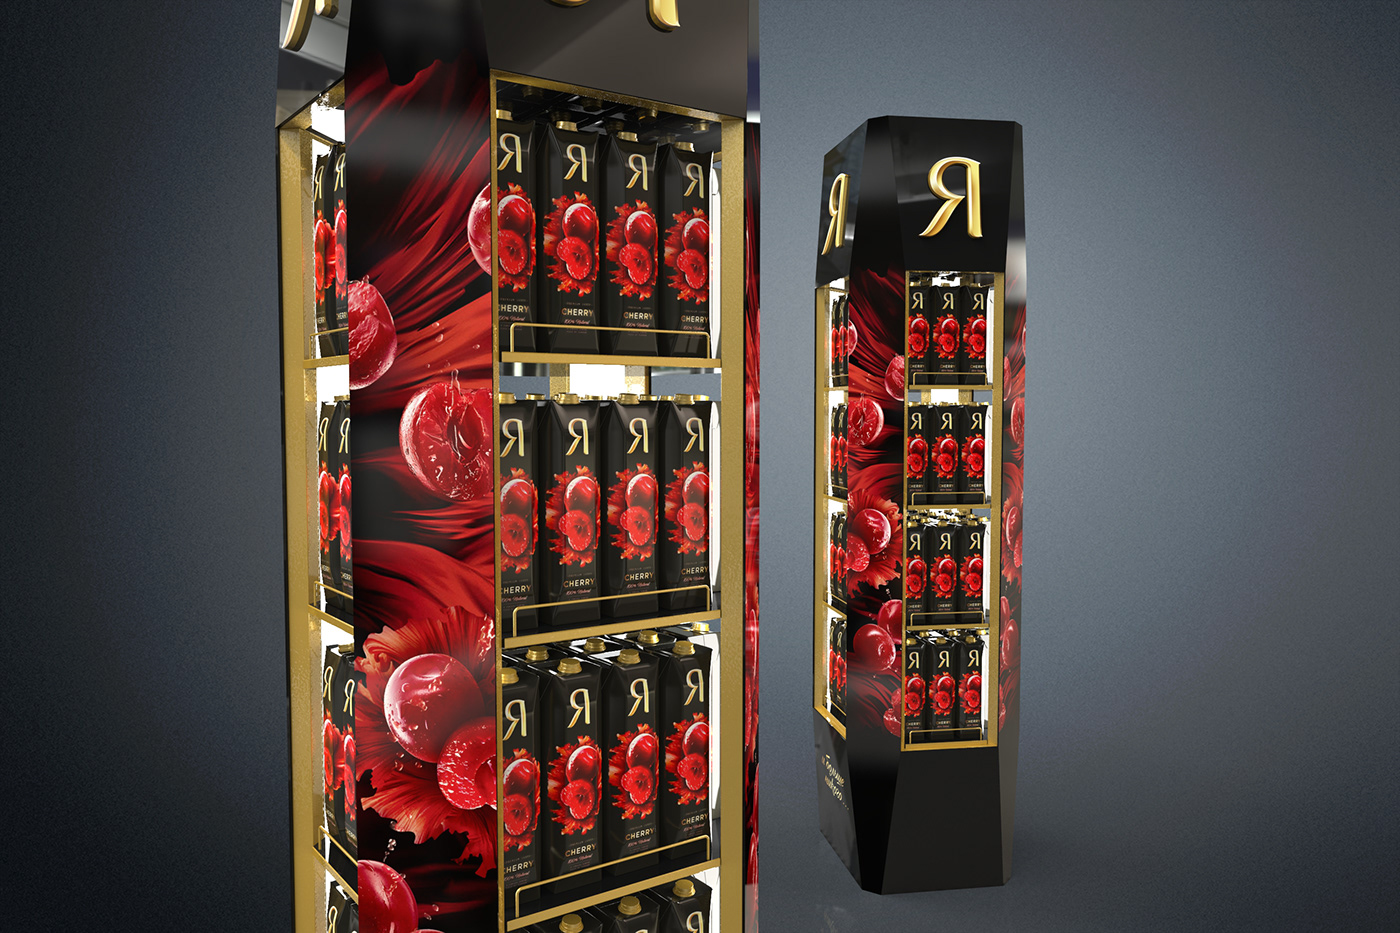 3D model 3d render drink Floor Display juice keyshot Pointofsaledisplay posm Retaildesign Rhinoceros